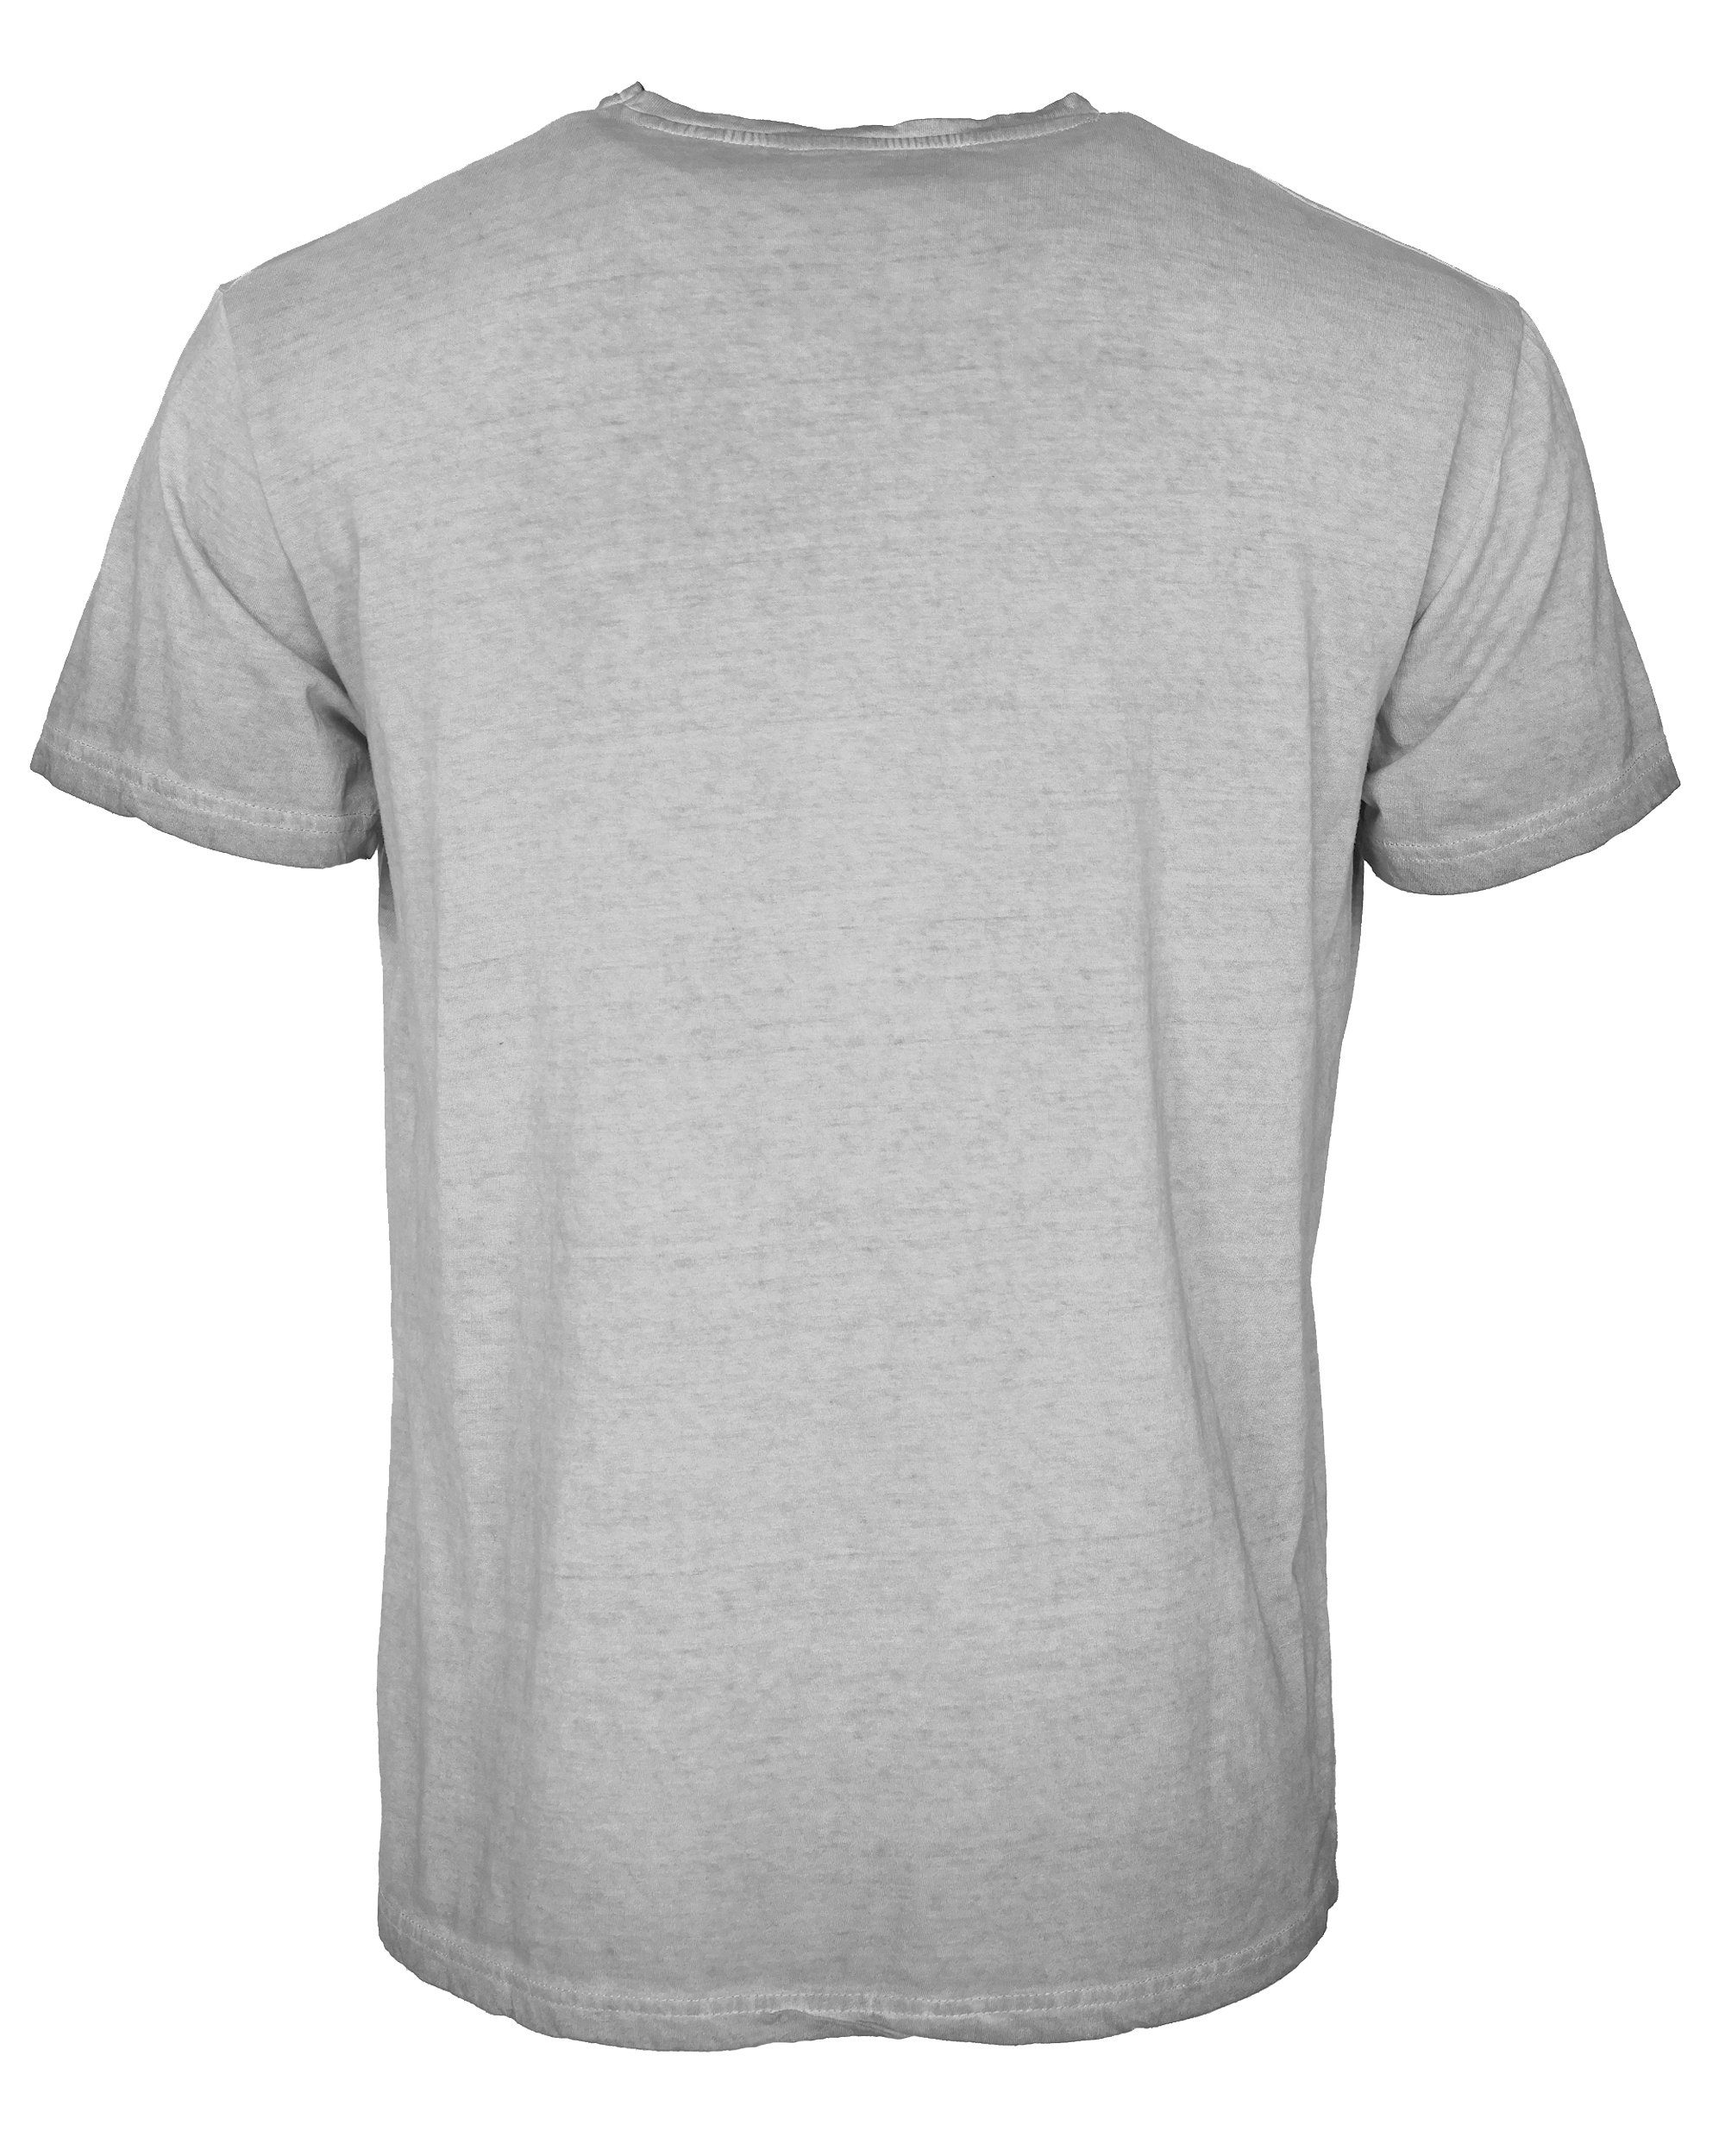 GUN grey light TG20212103 TOP T-Shirt